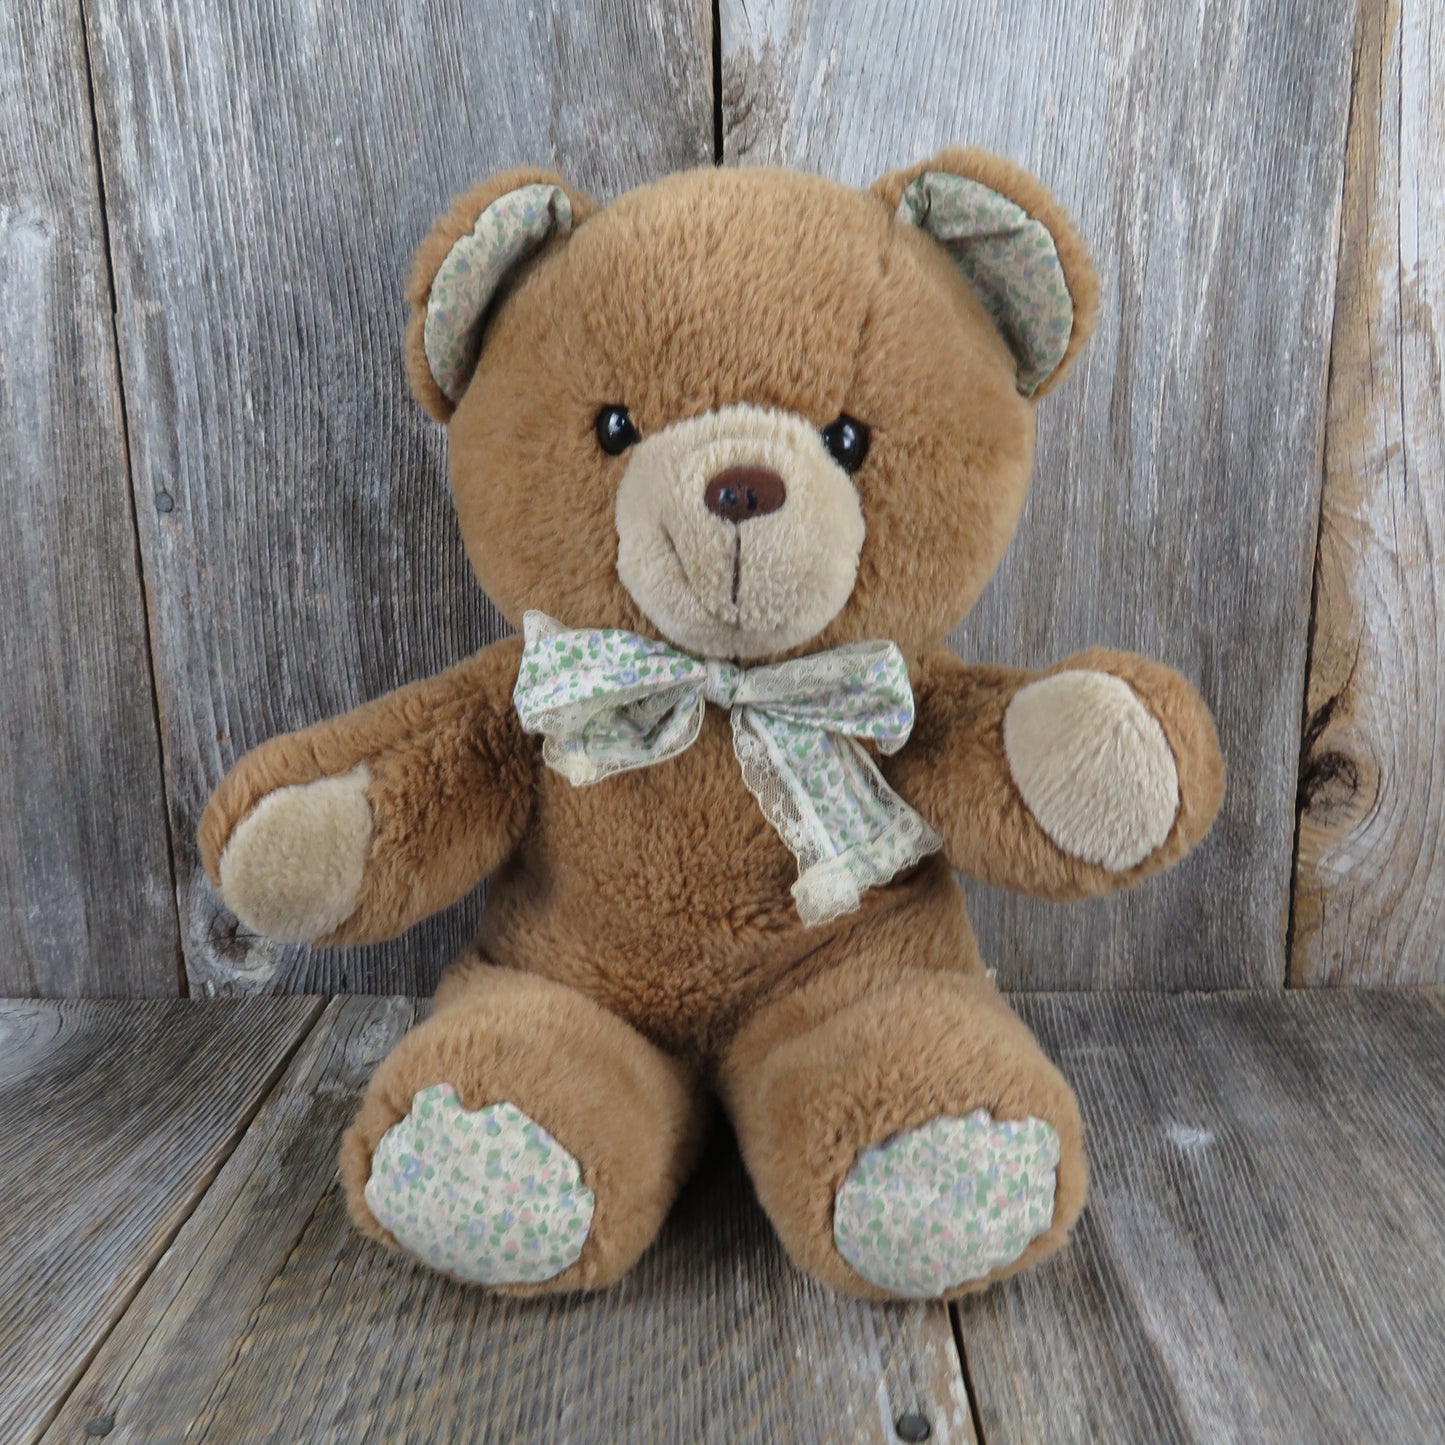 Vintage Teddy Bear Plush Stuffed Animal Flocked Nose Flower Print Bow Commonwealth 1989 - At Grandma's Table